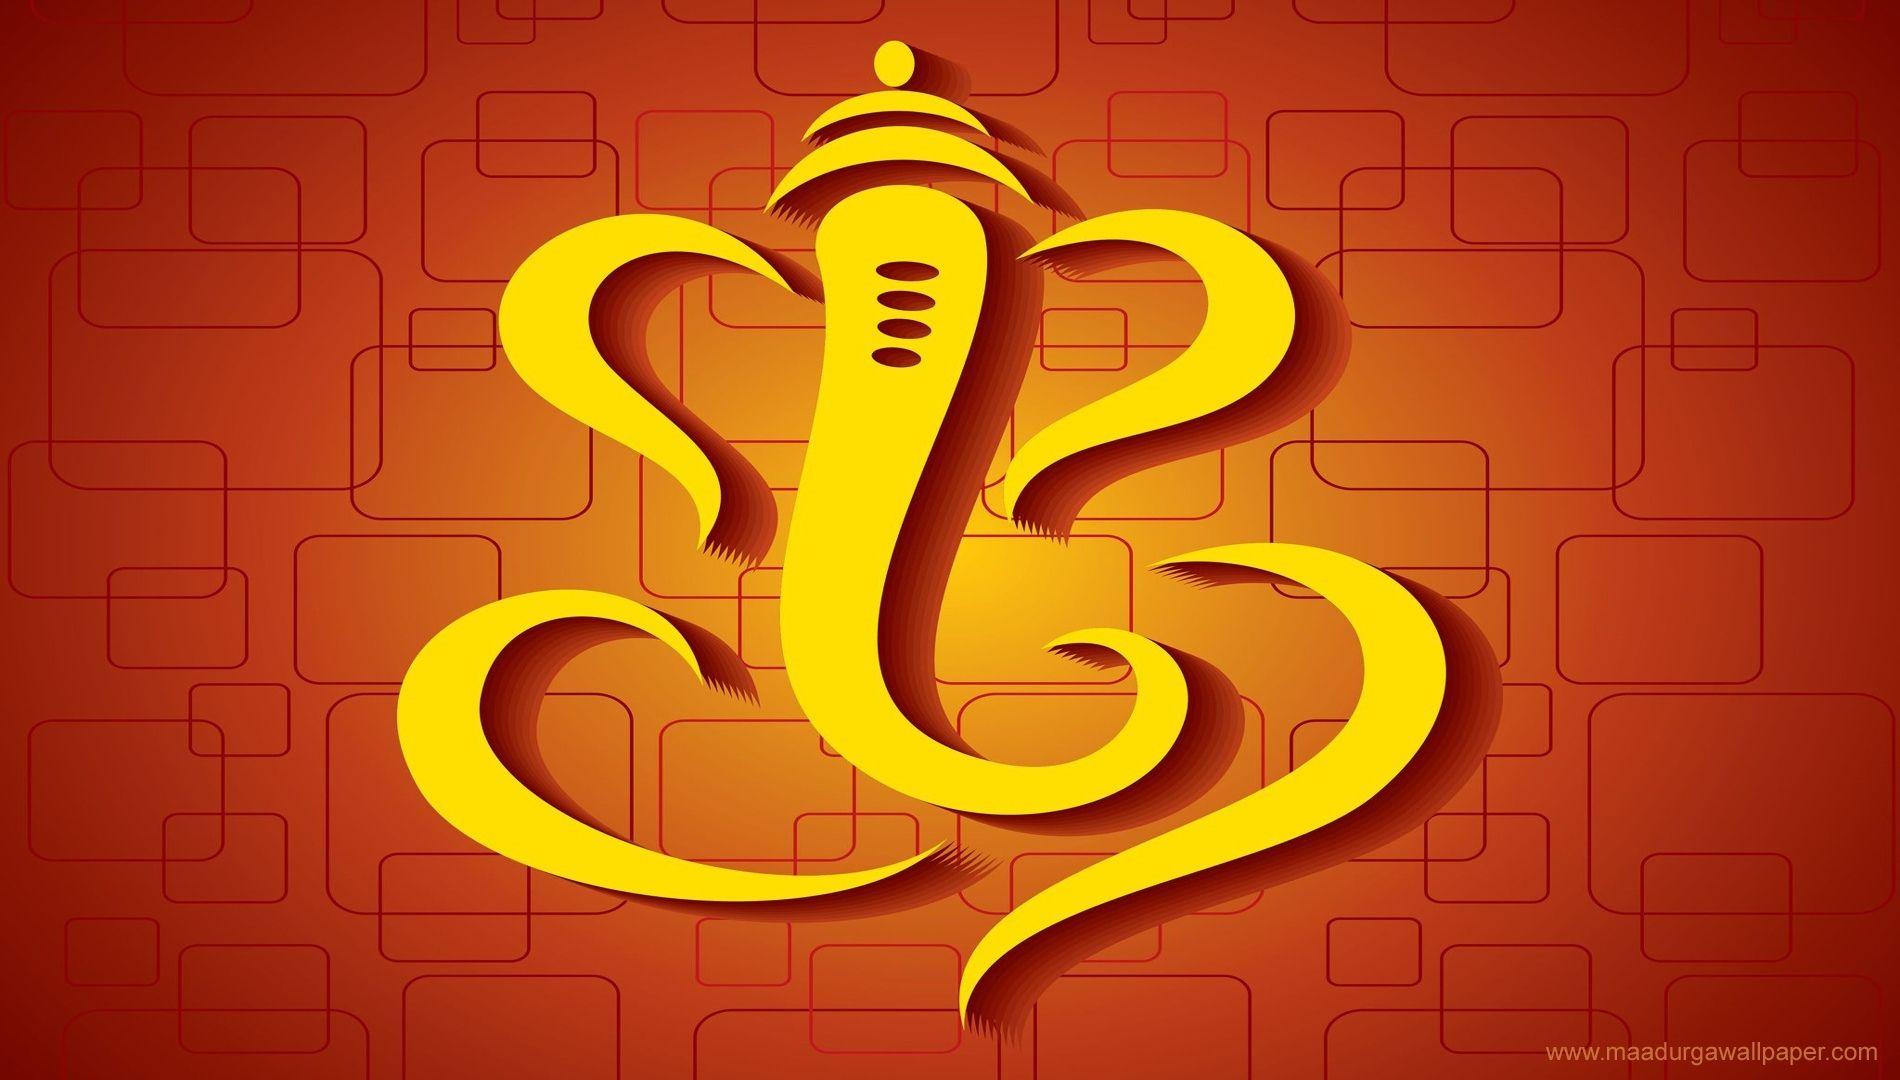 Lord Ganesha wallpaper. God Ganesha Image